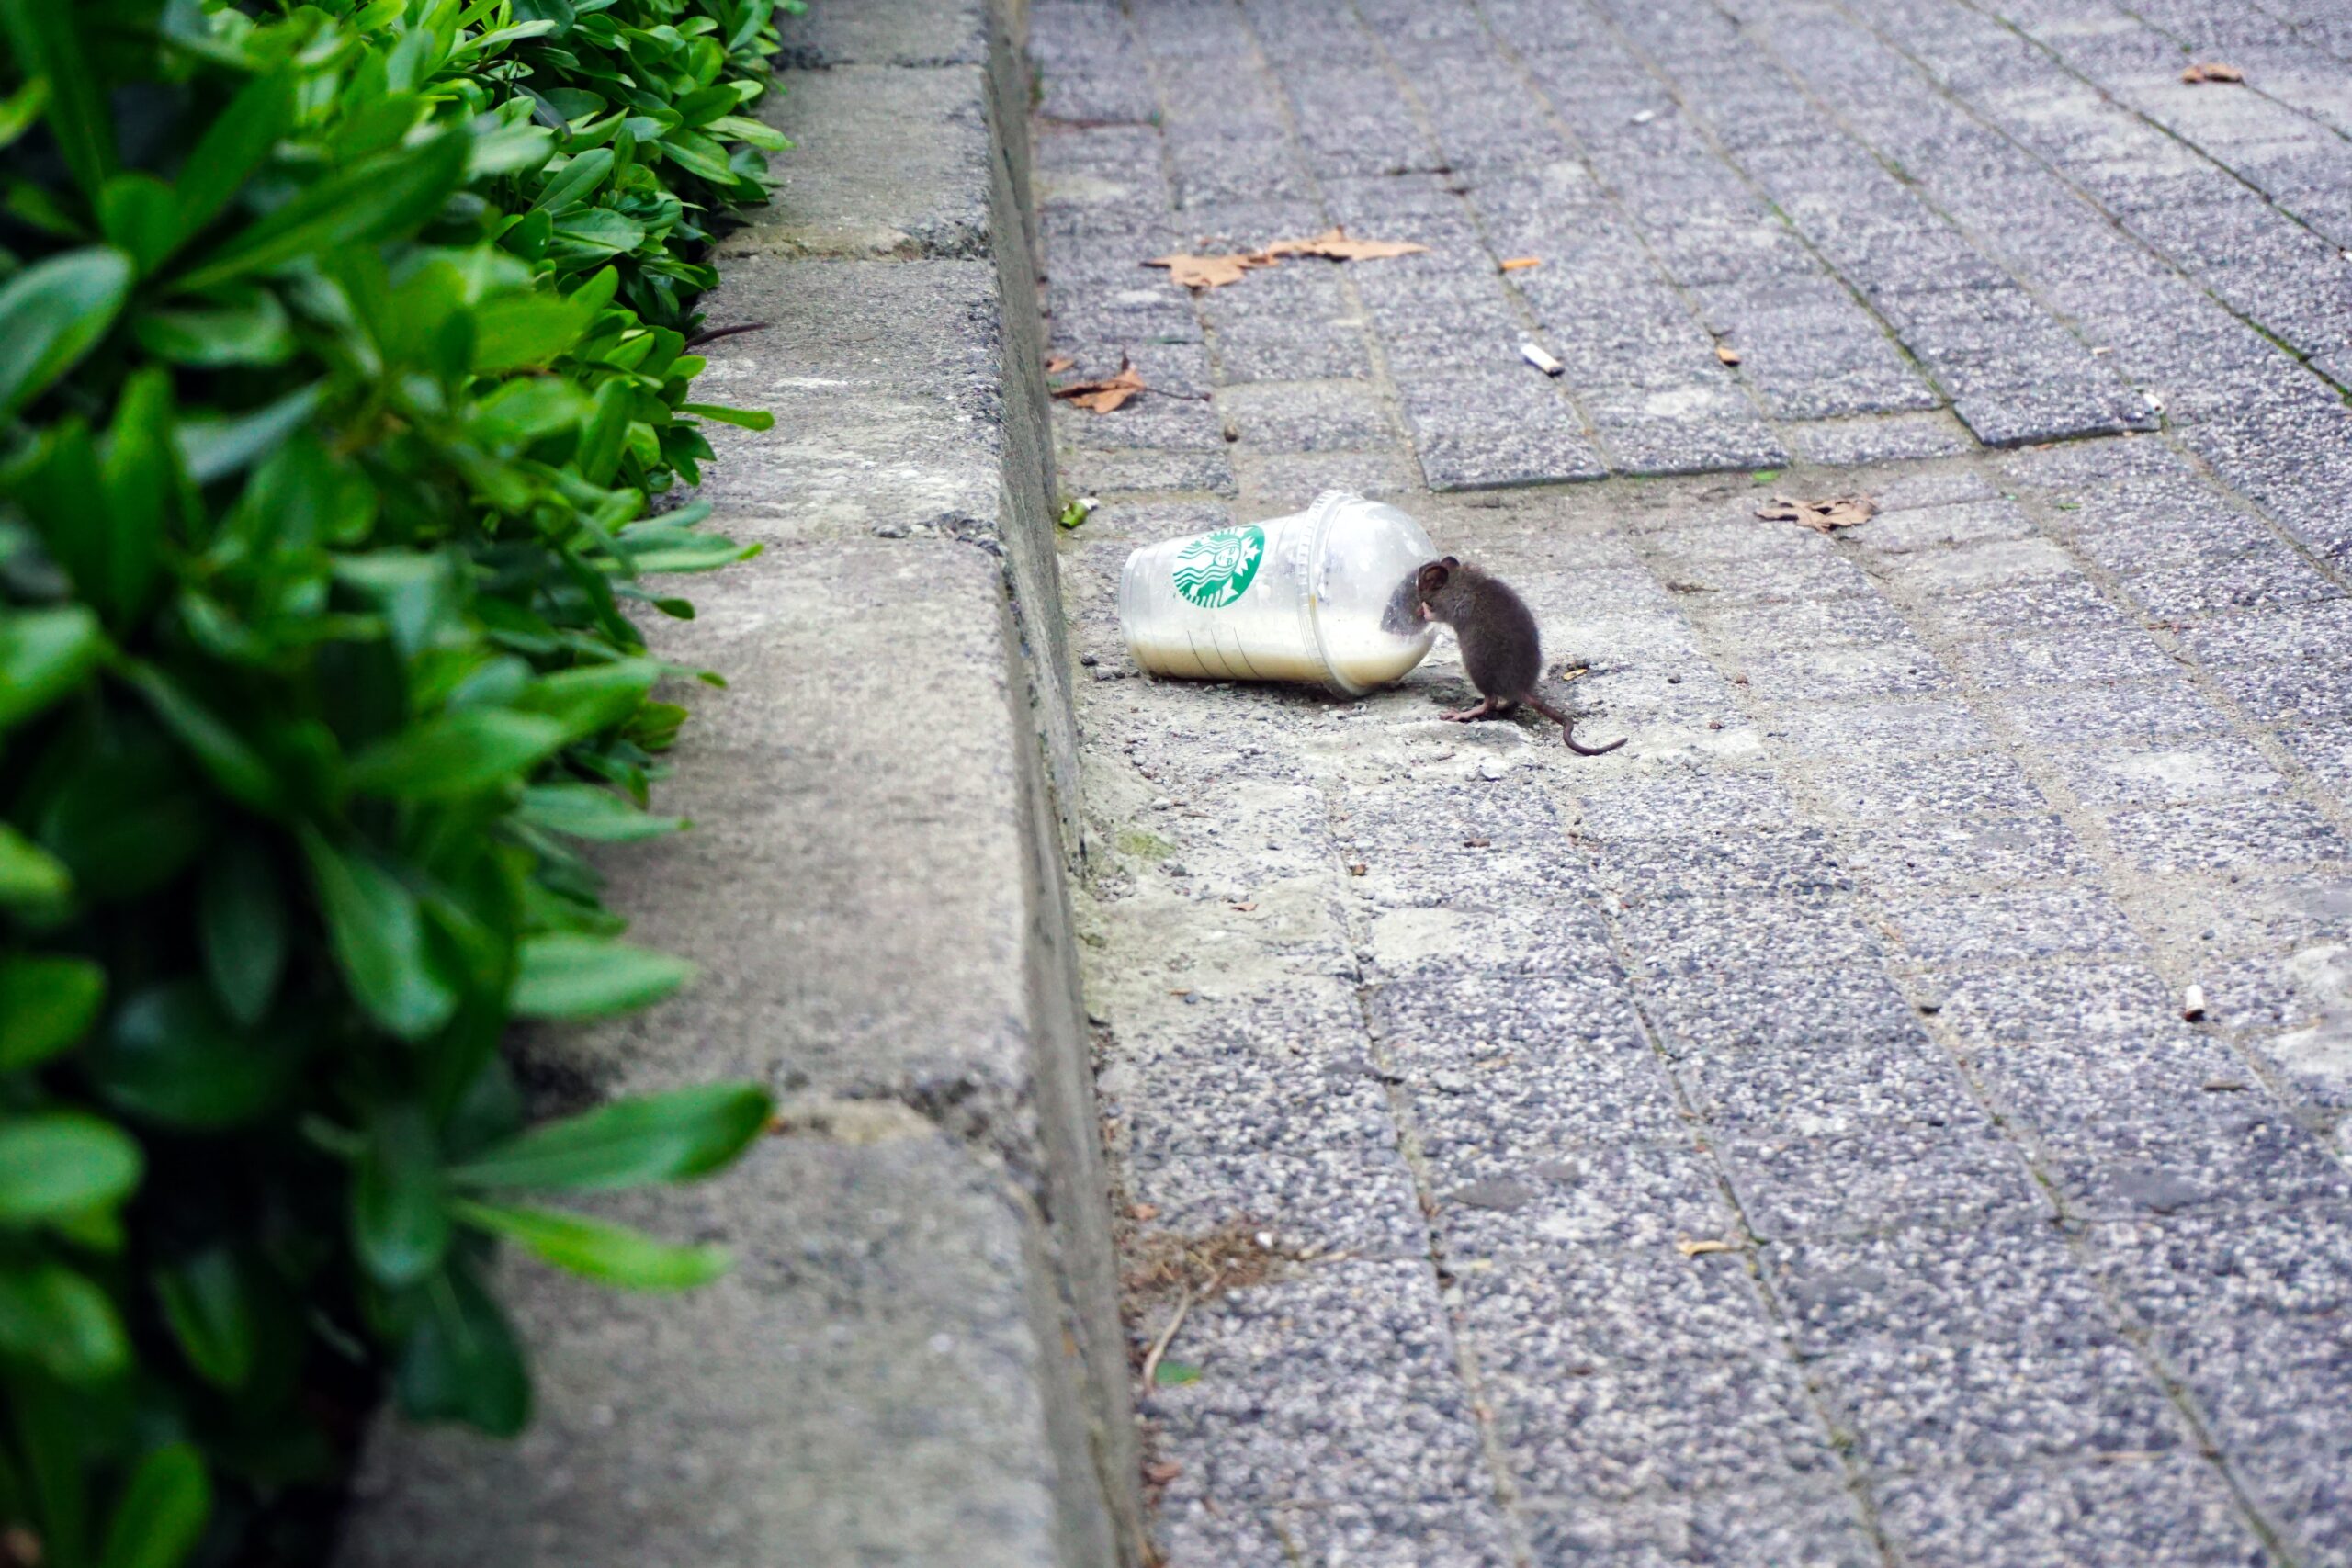 Dedetização de Ratos - rat beside Starbucks plastic up